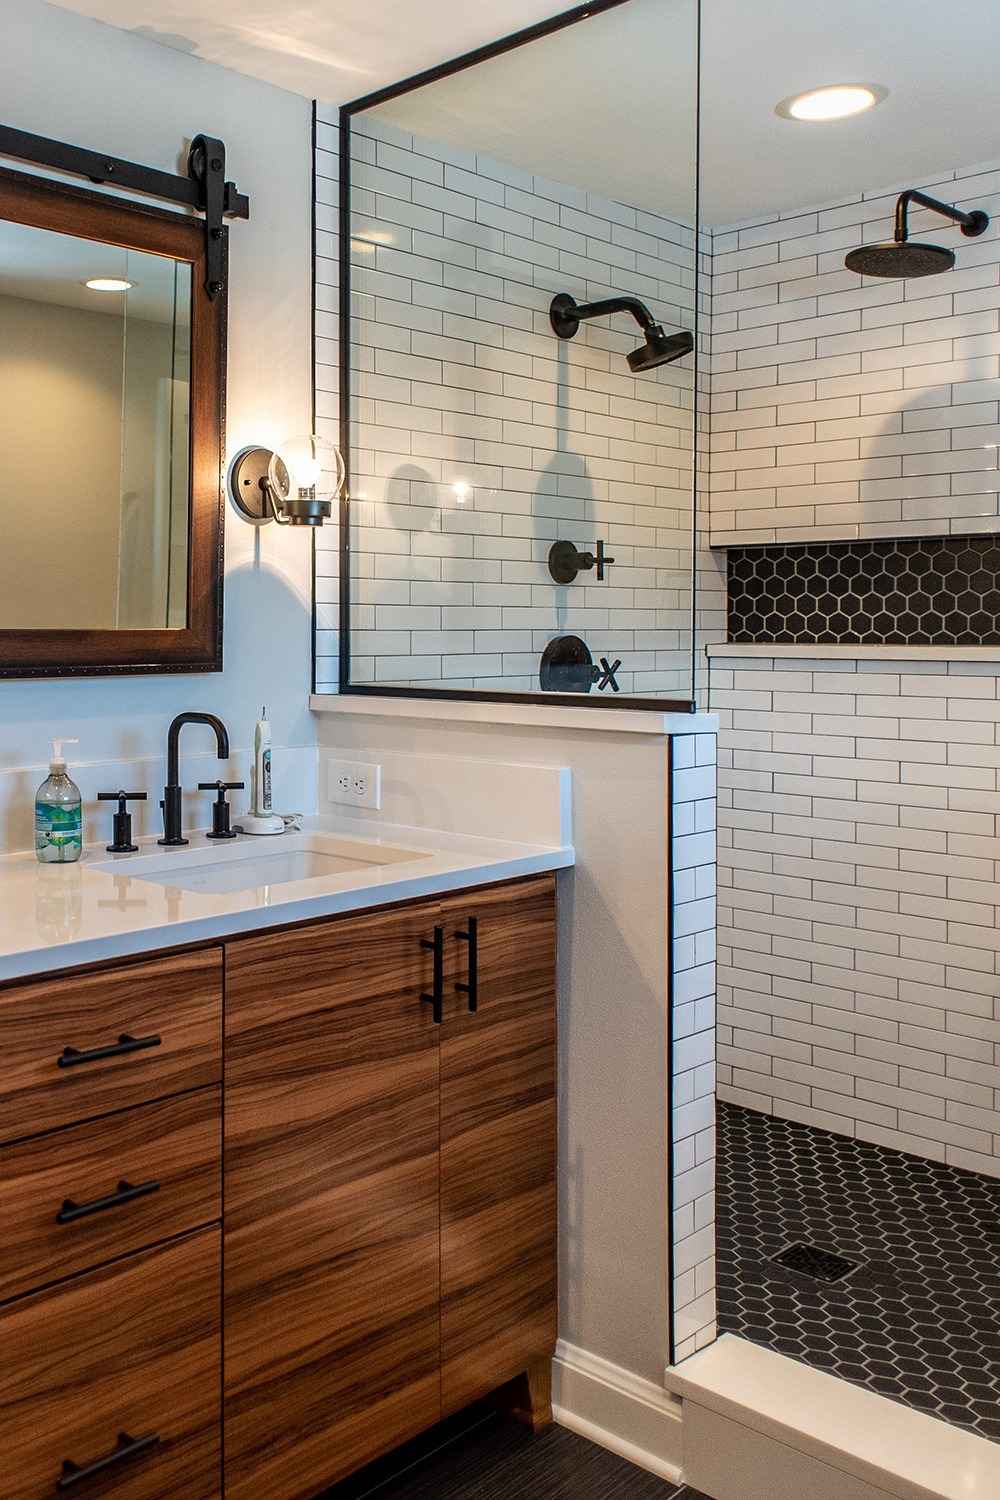 Bathroom Design Re Bath Bathroom Remodel Tub Shower Toilet Sink Fixtures Space Wall